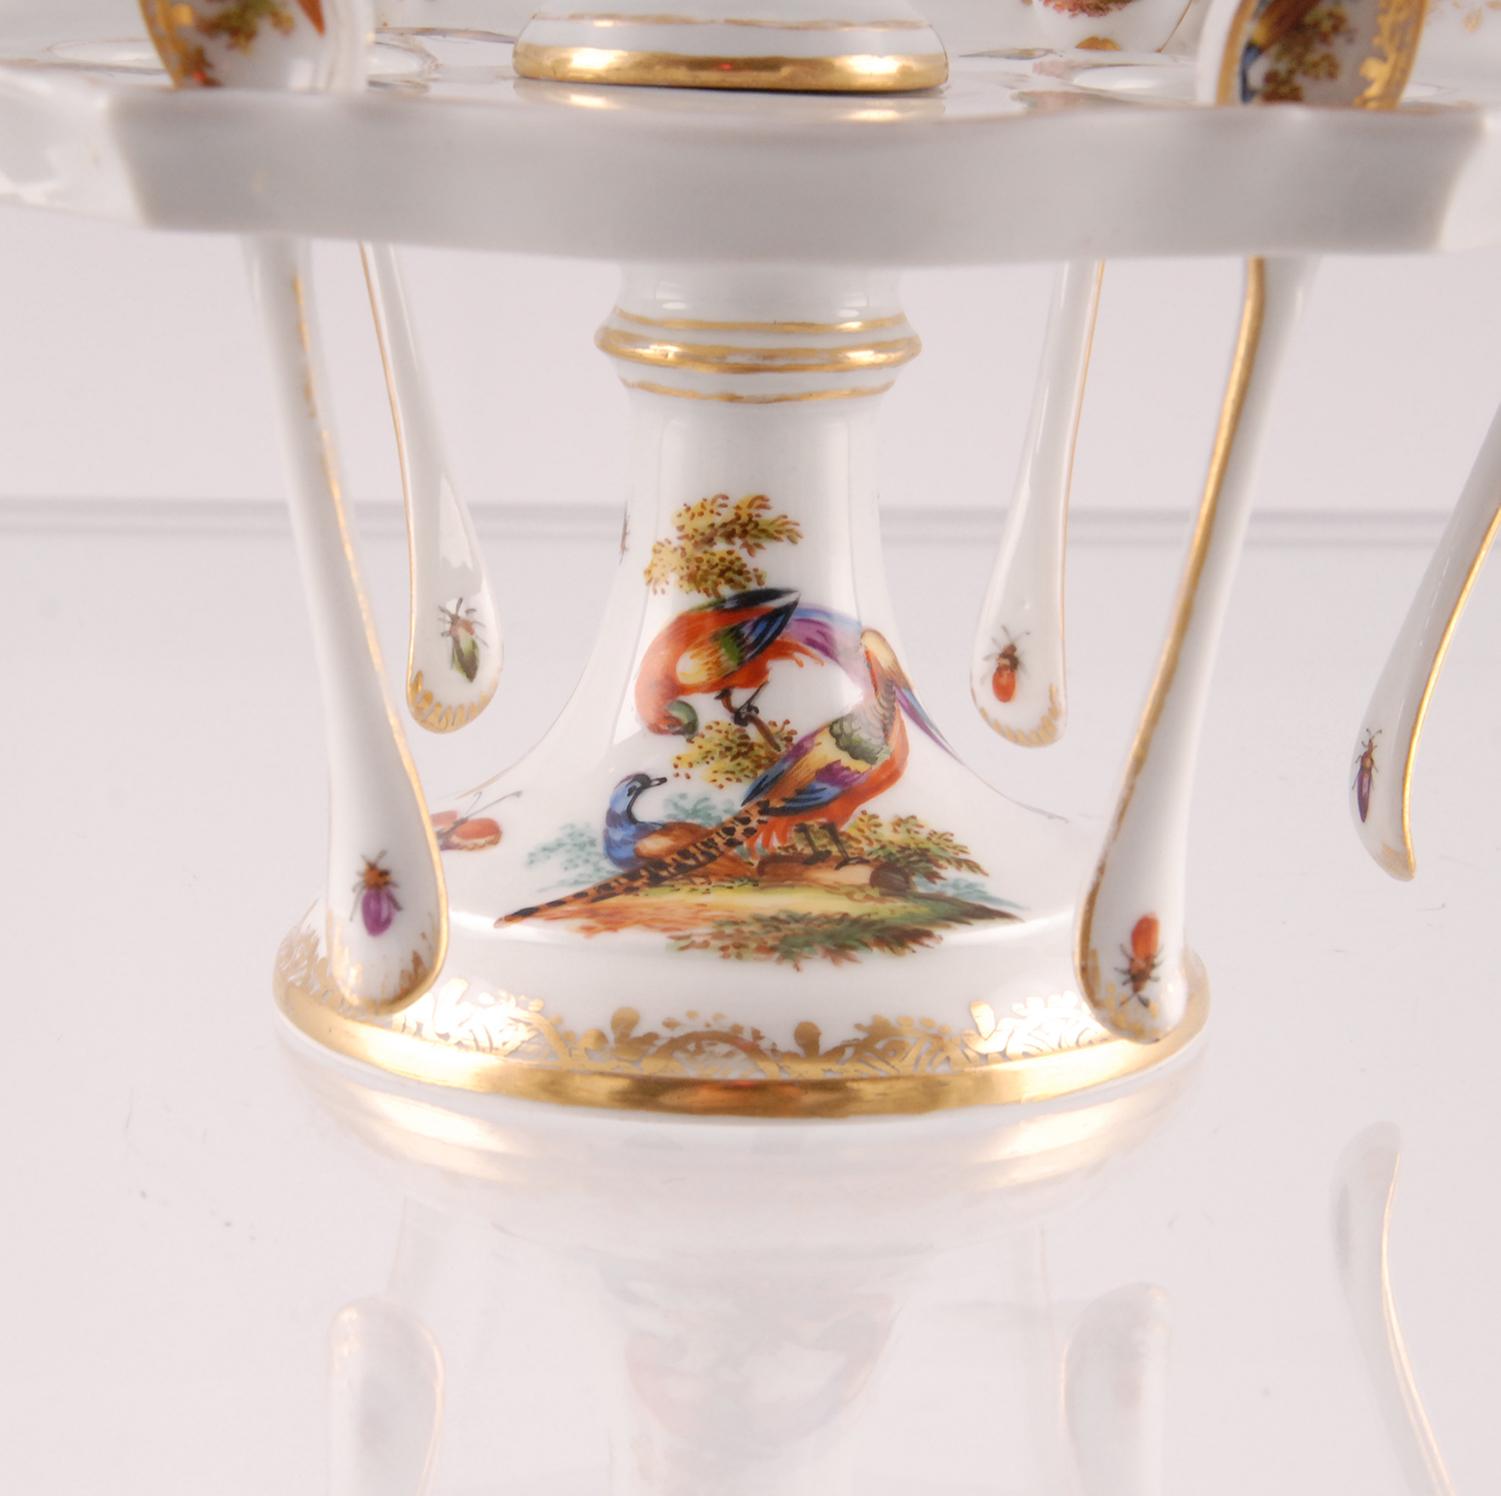 Baroque Revival Porcelain Egg Stand Cruet 18th century Meissen Style Victorian German Handmade